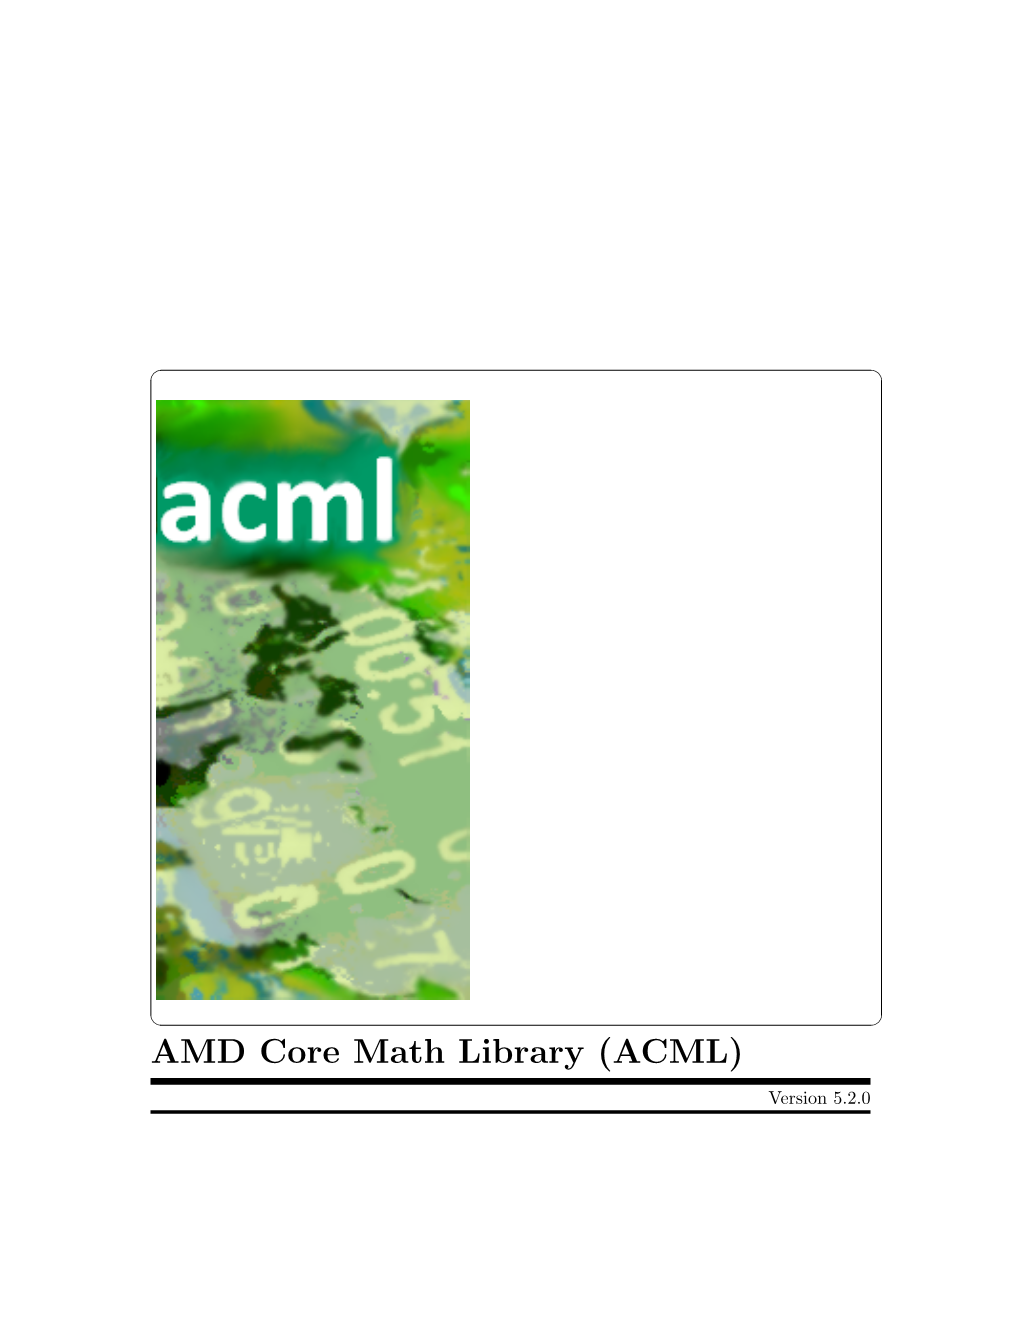 AMD Core Math Library (ACML) Version 5.2.0